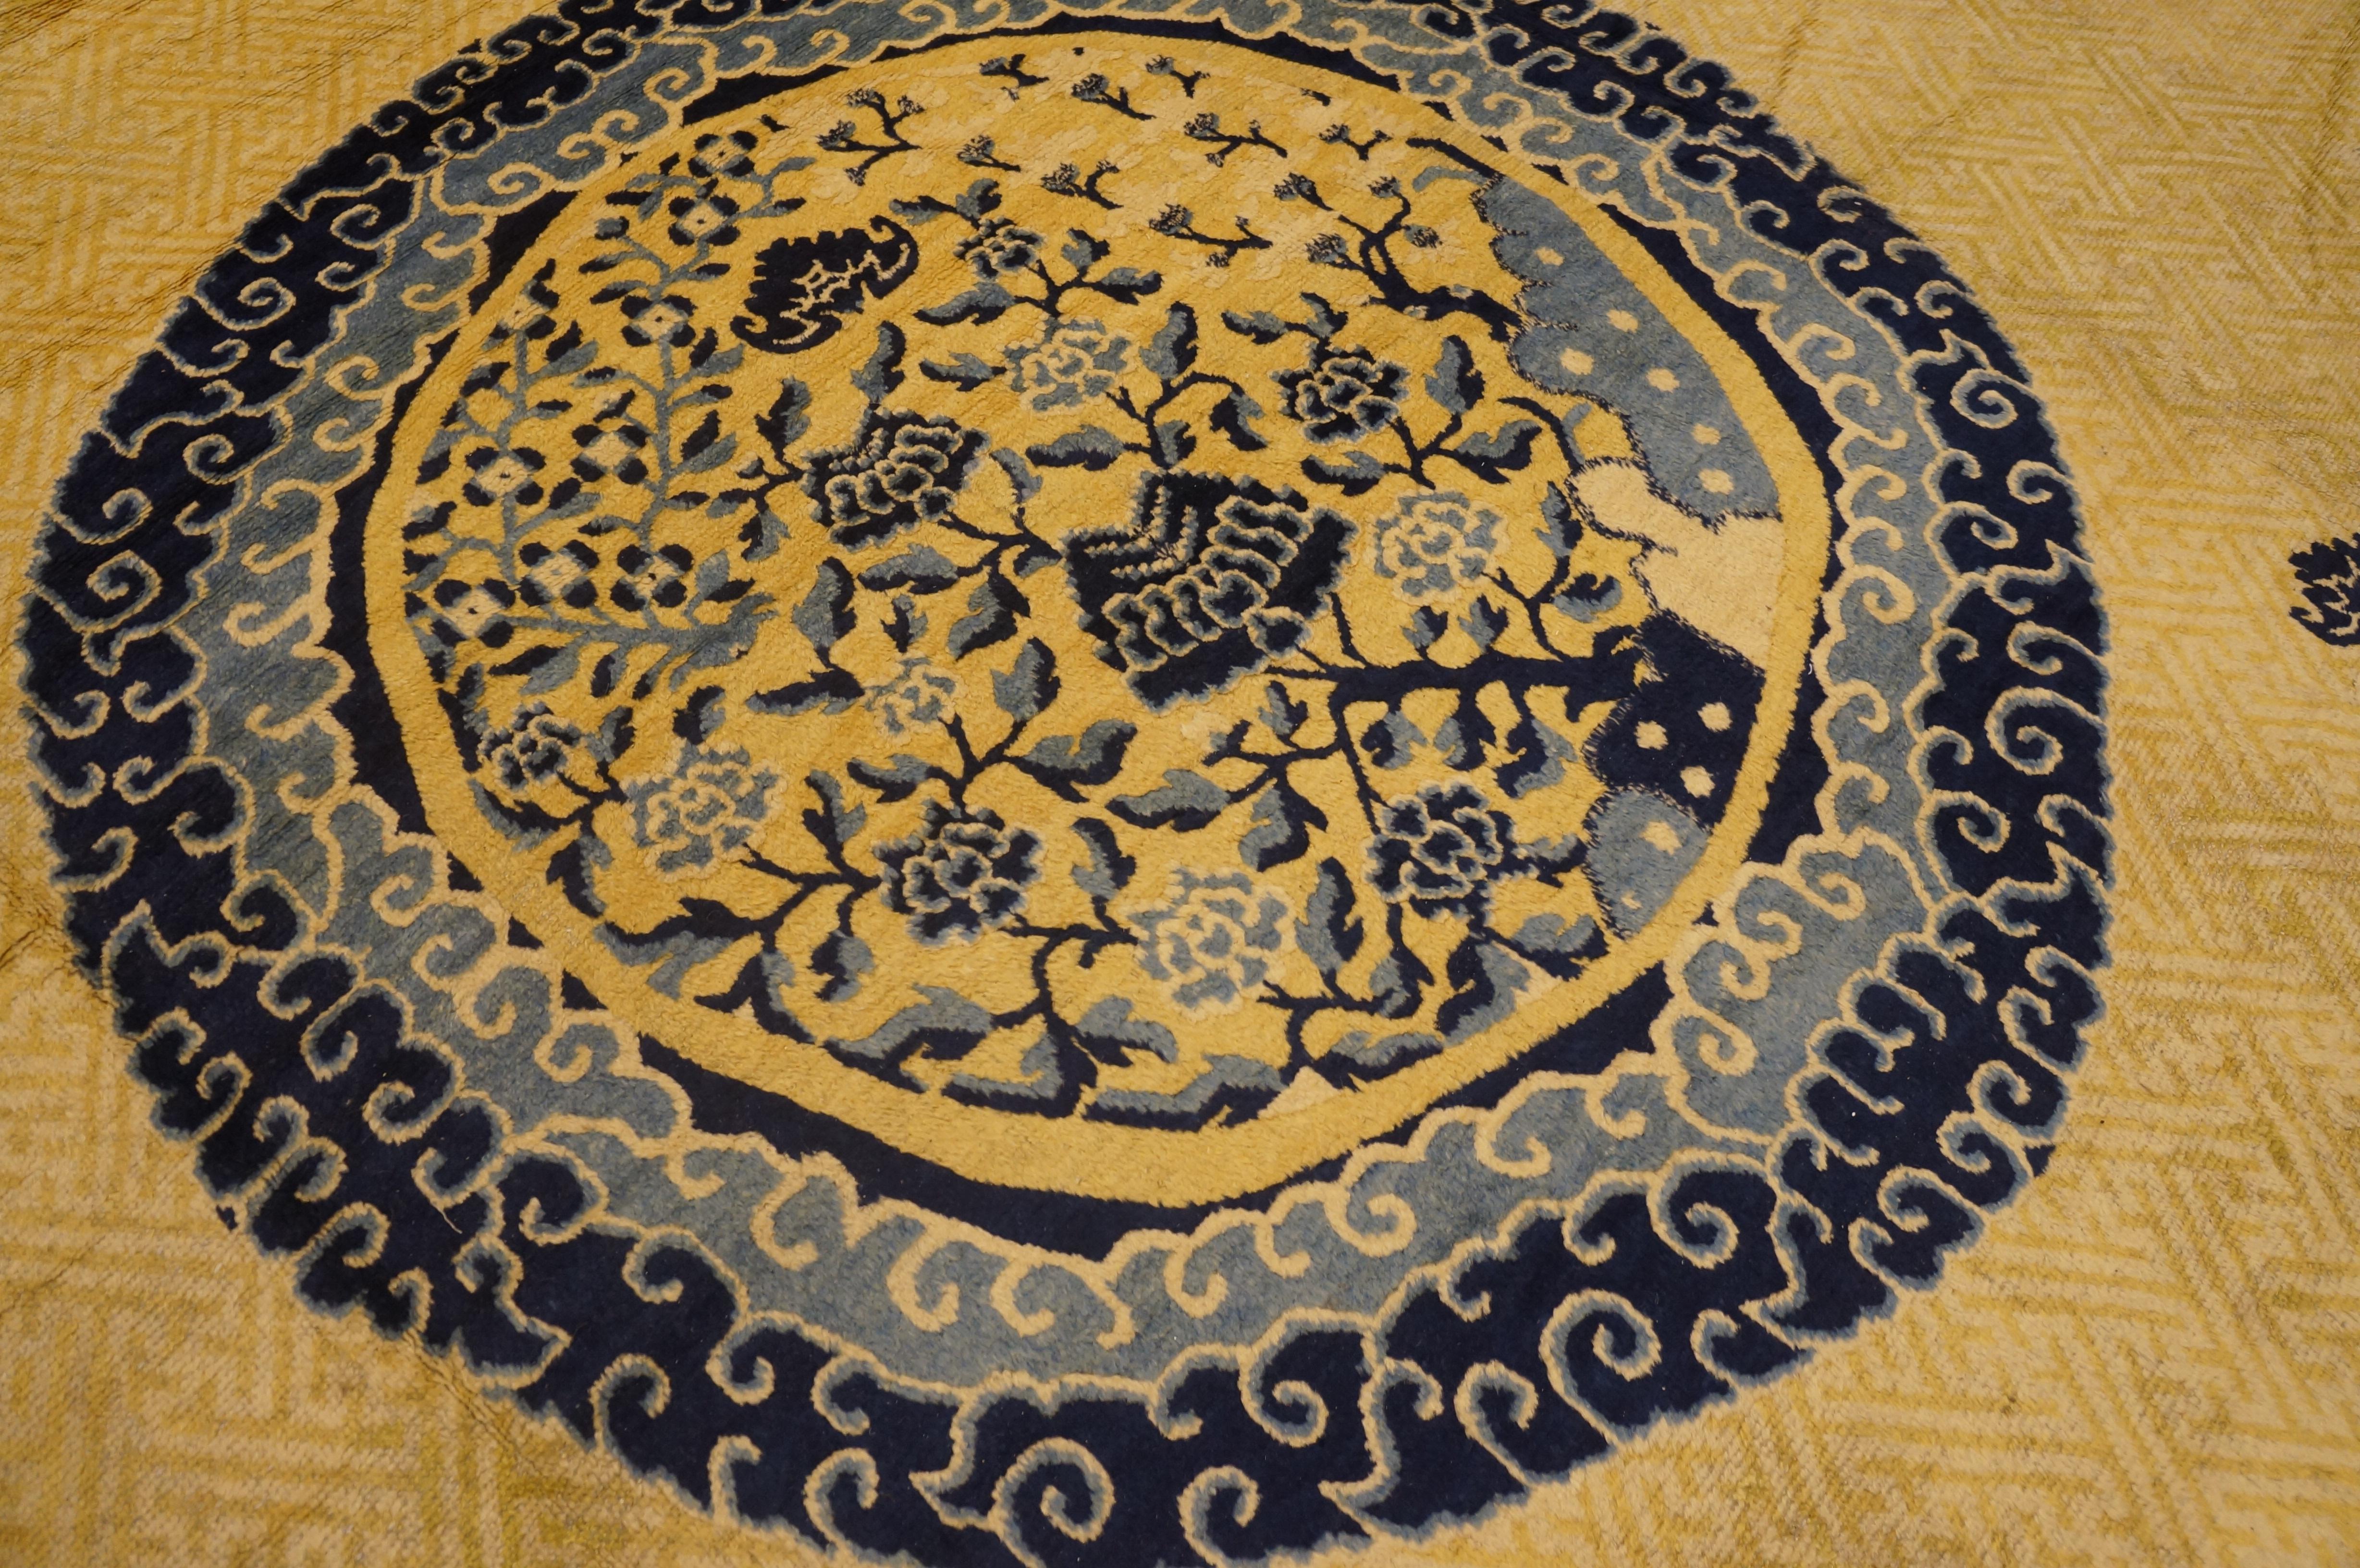 Late 18th Century Chinese Ningxia Carpet ( 13'6